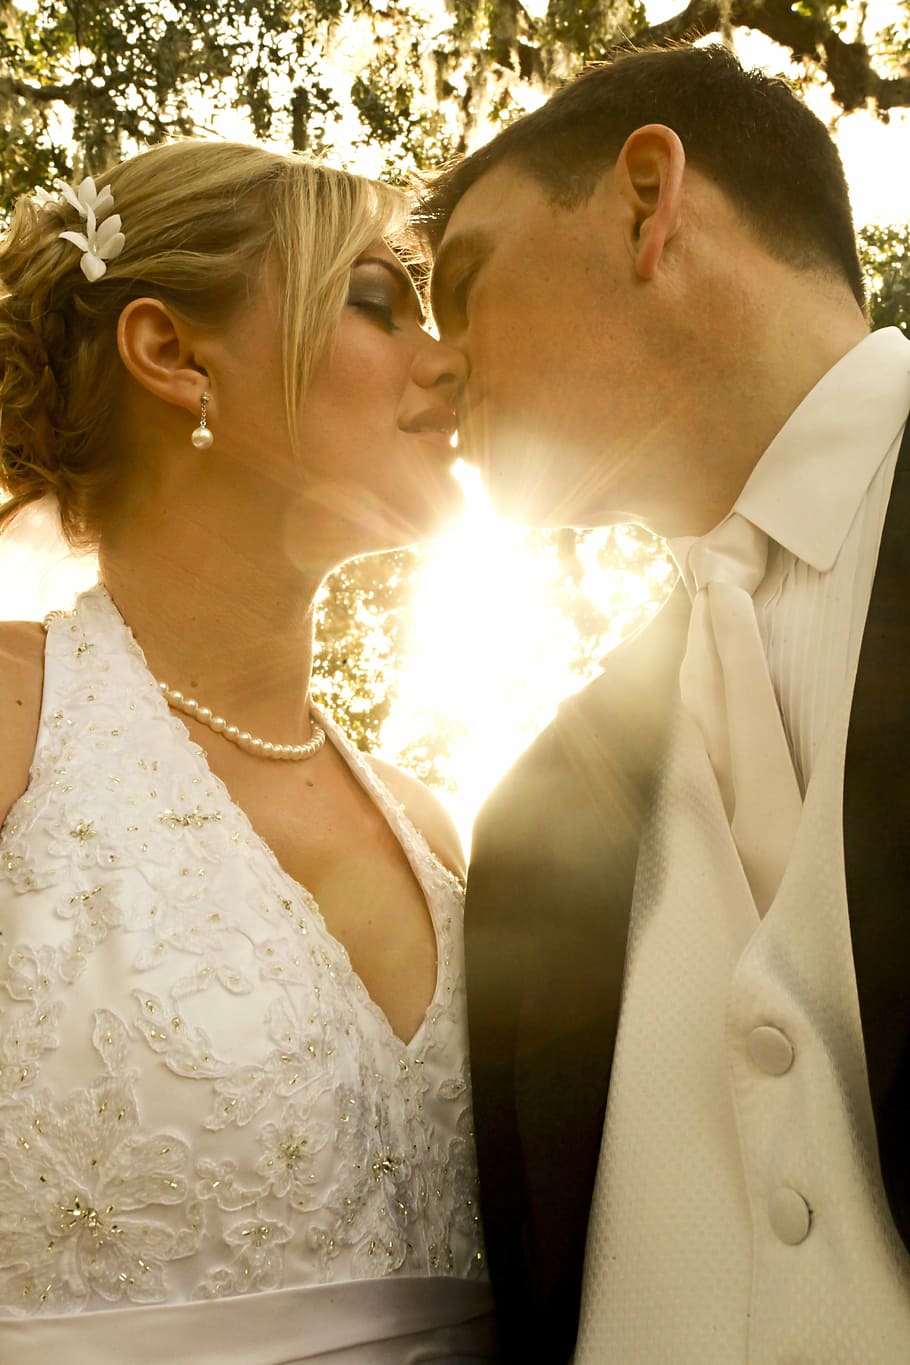 man, woman, kissing, bride, groom, wedding, marriage, love, kiss, married